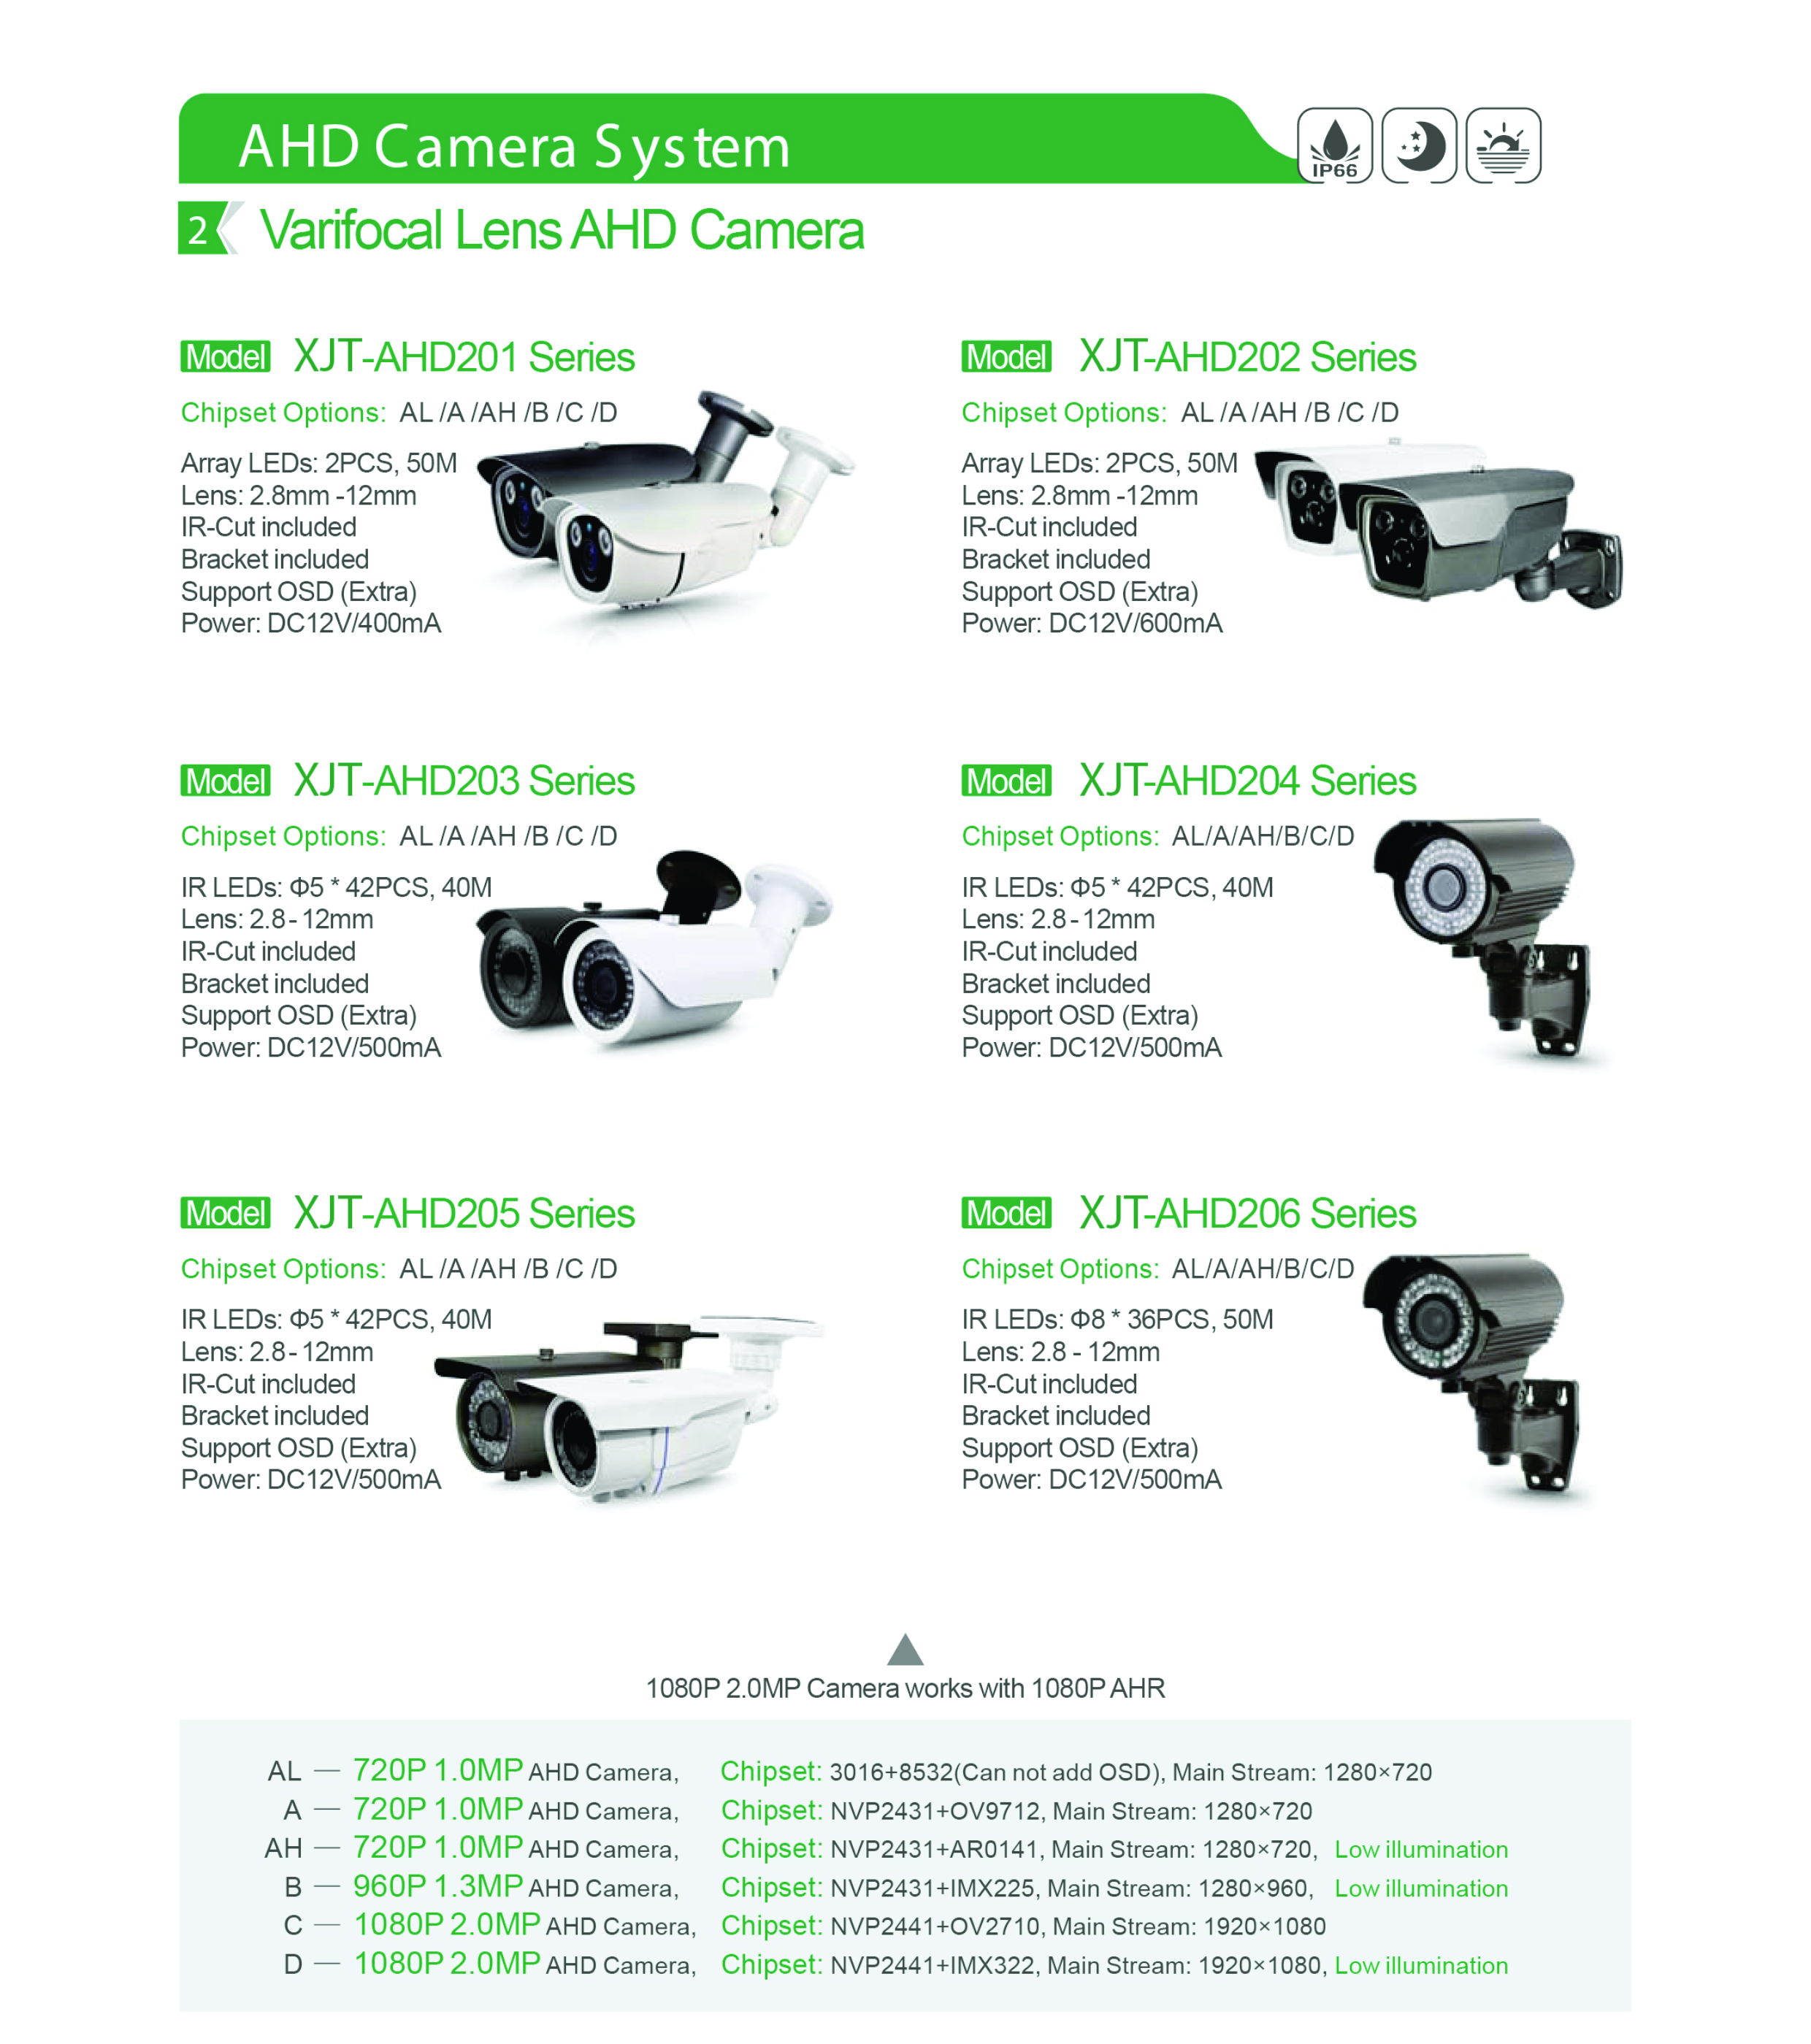 AHD Camera System